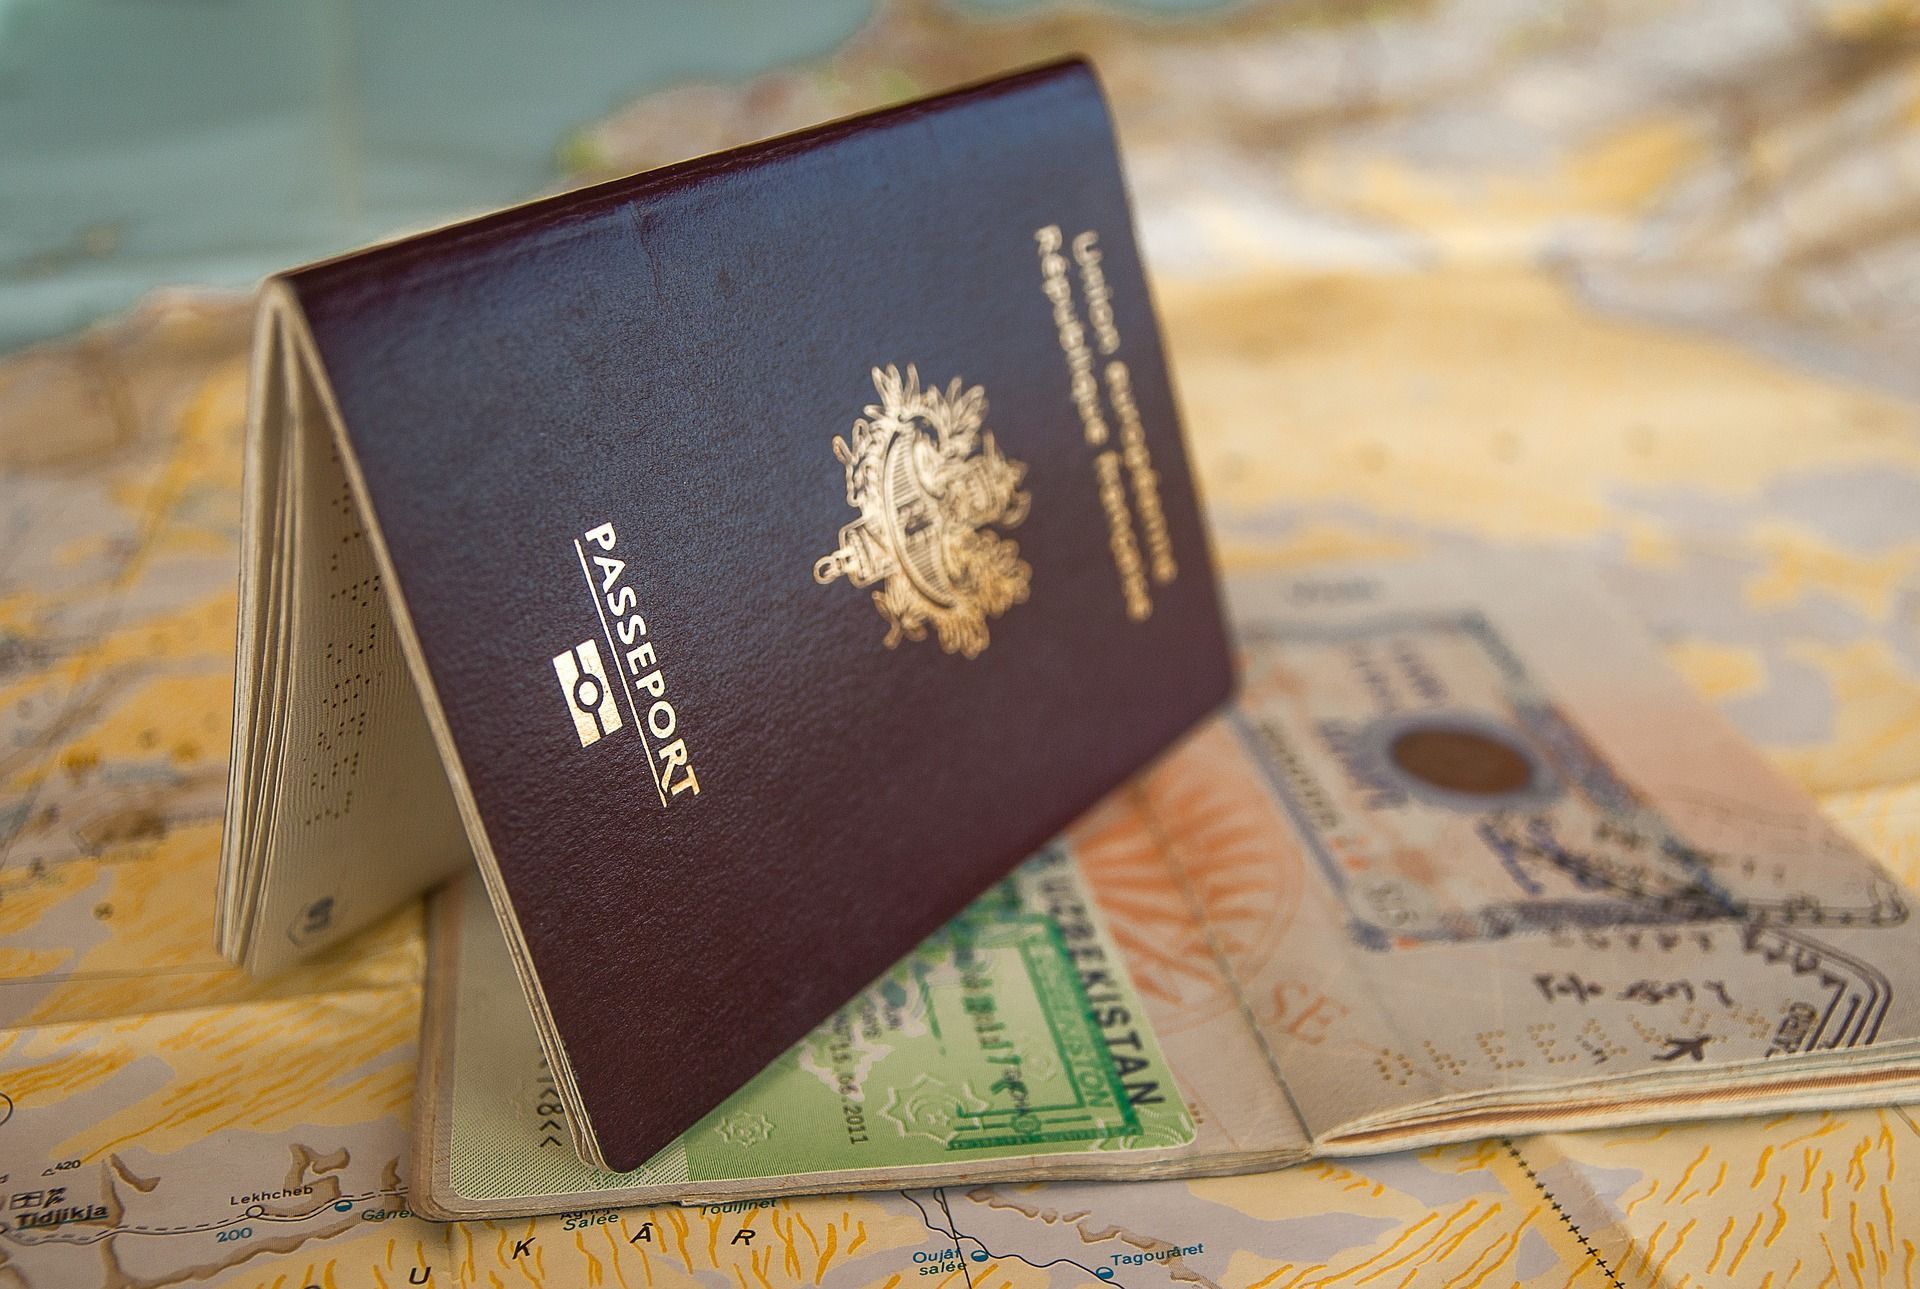 Wniosek o paszport dla dziecka